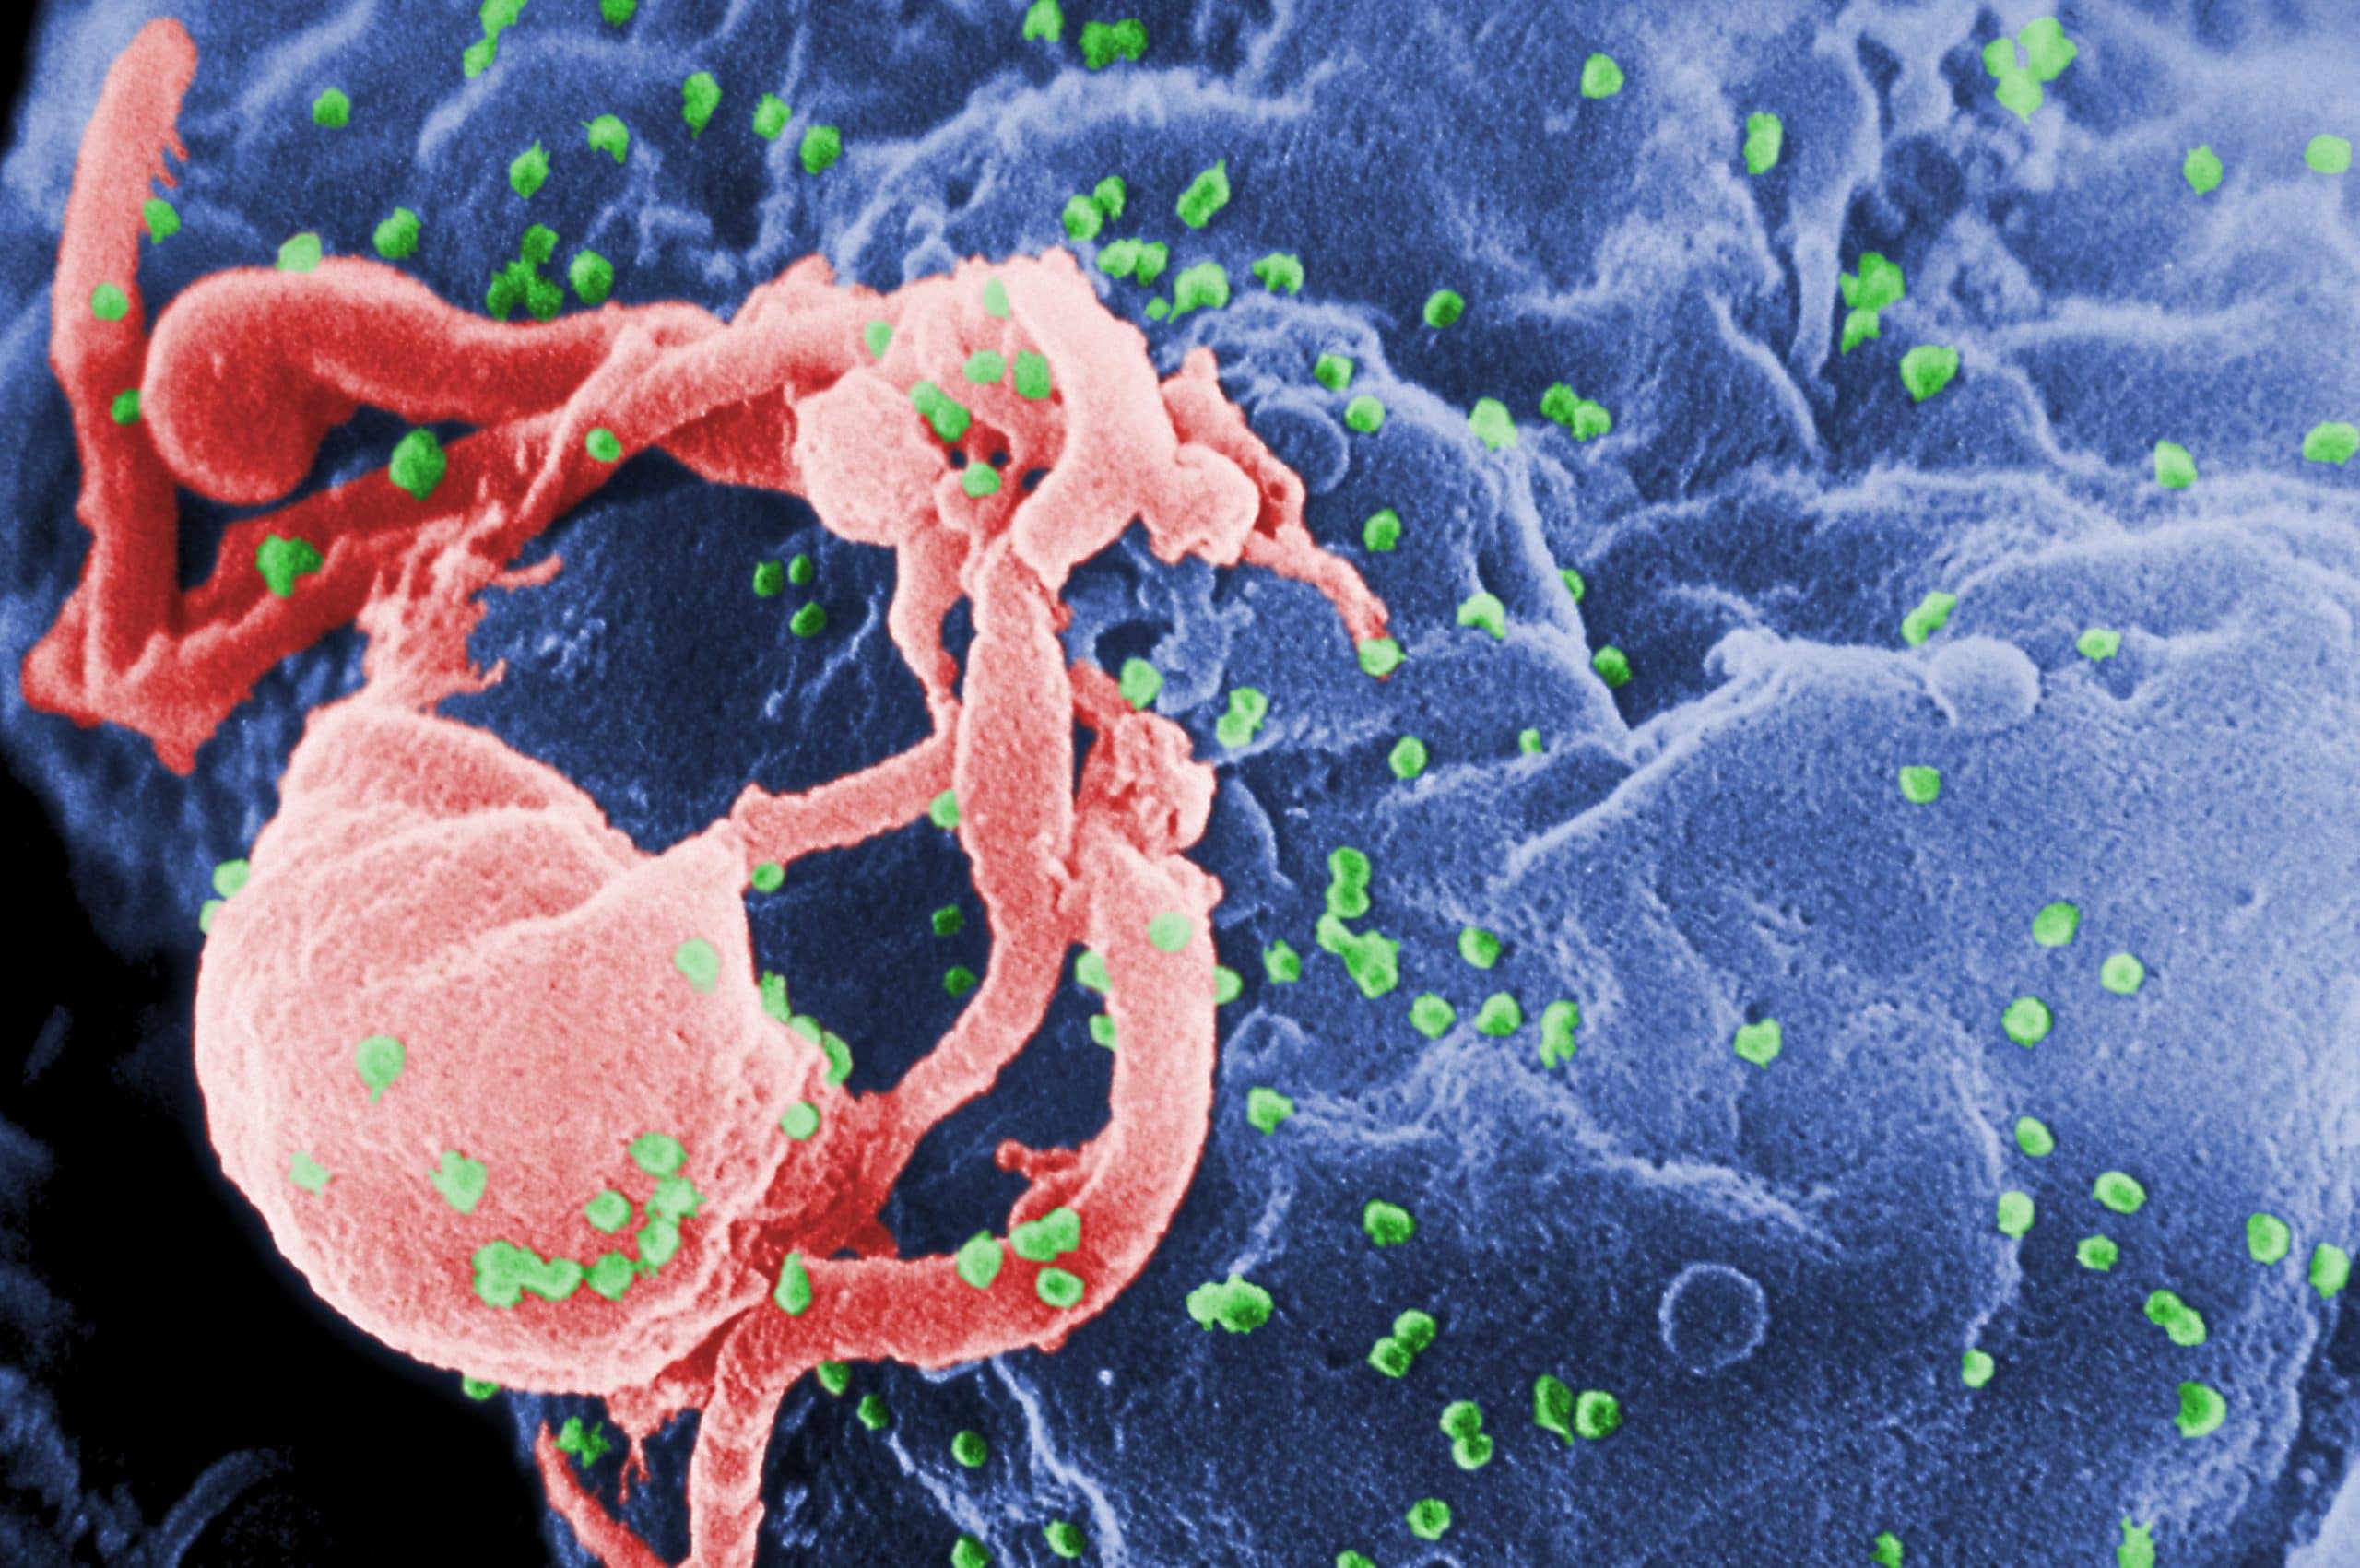 the HIV virus